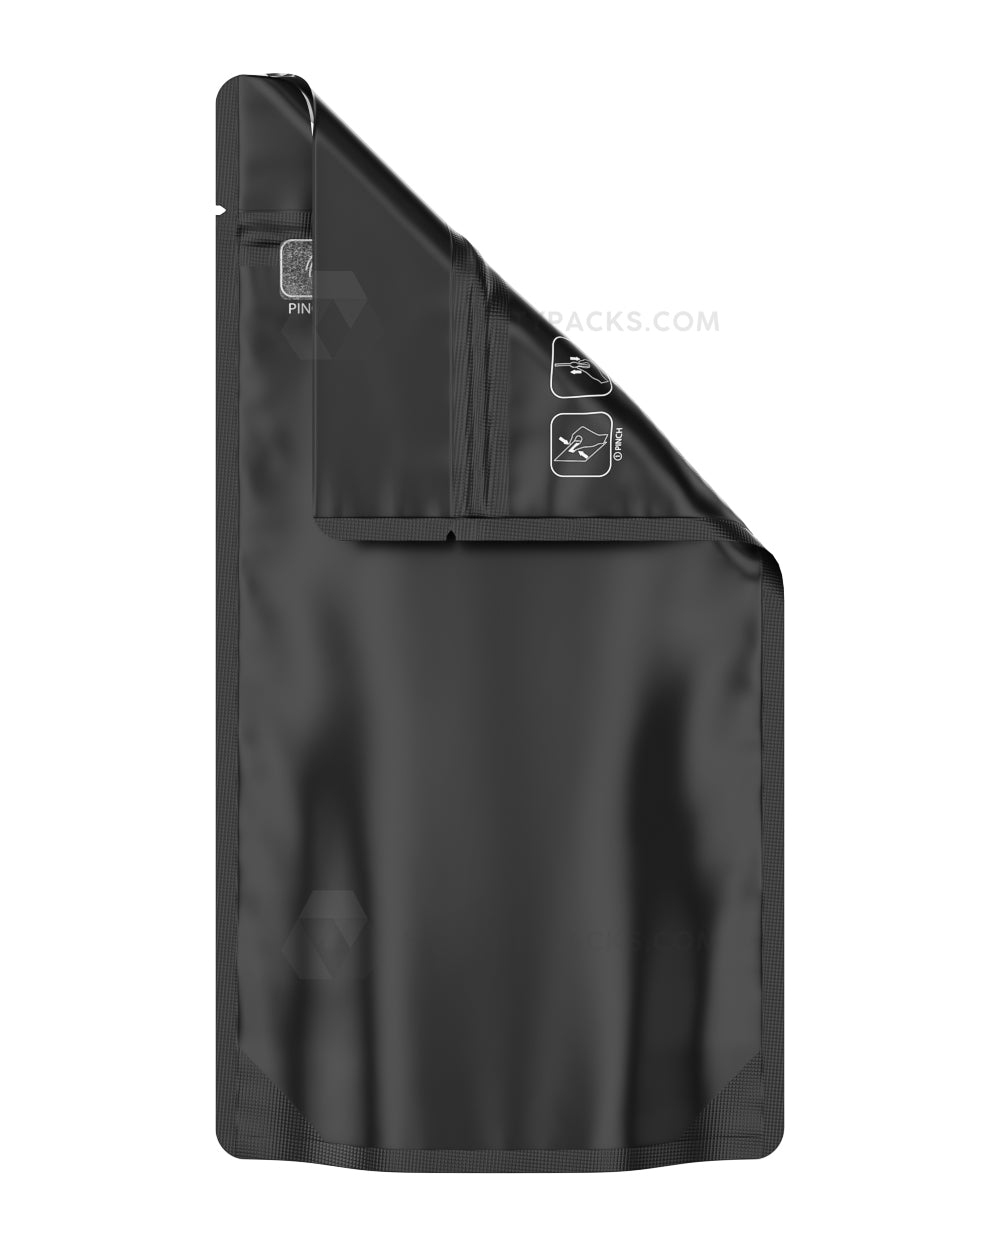 Matte-Black 5" x 8.8" Pinch N Pull 3.0 Mylar Child Resistant & Tamper Evident Bags (14 grams) 250/Box